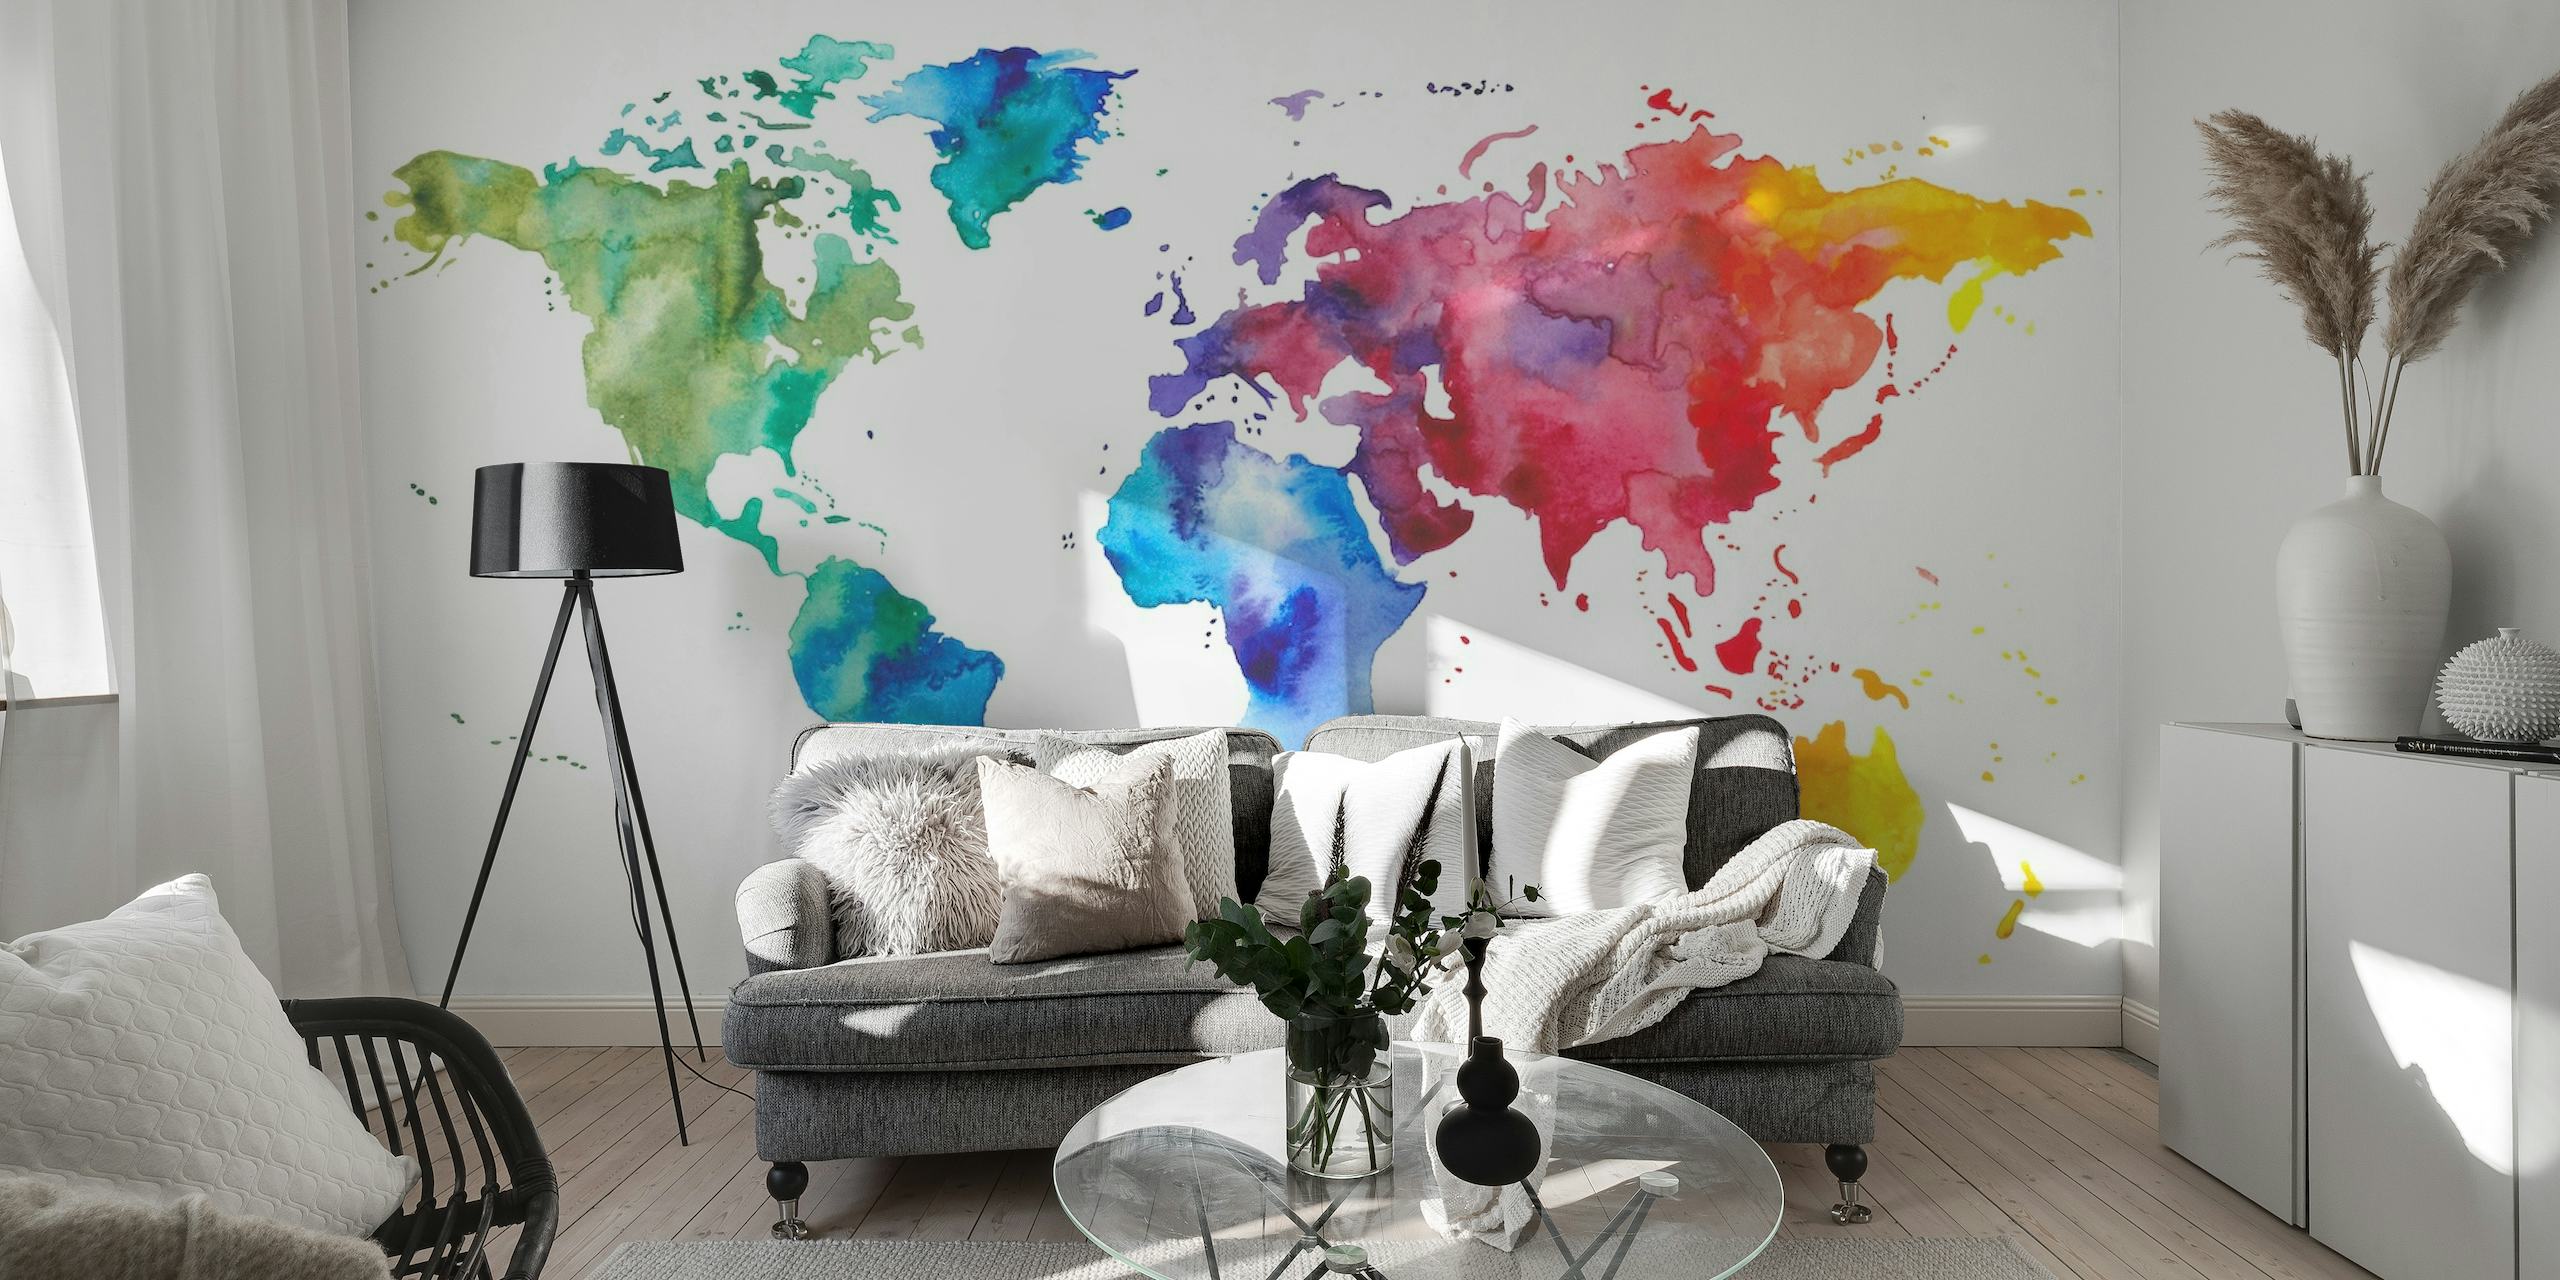 Painted world map papel pintado